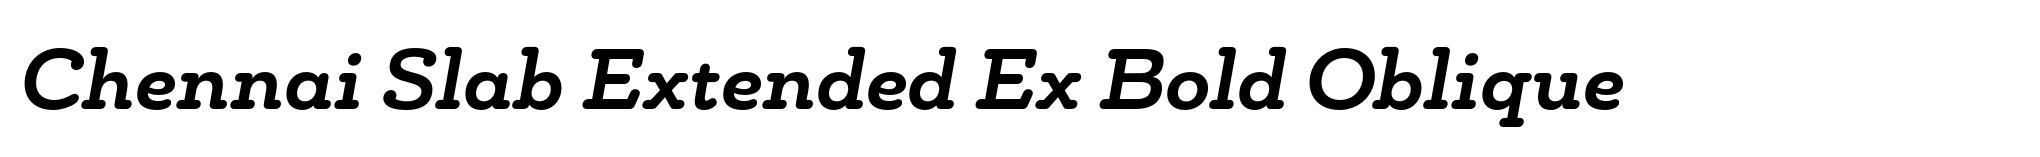 Chennai Slab Extended Ex Bold Oblique image